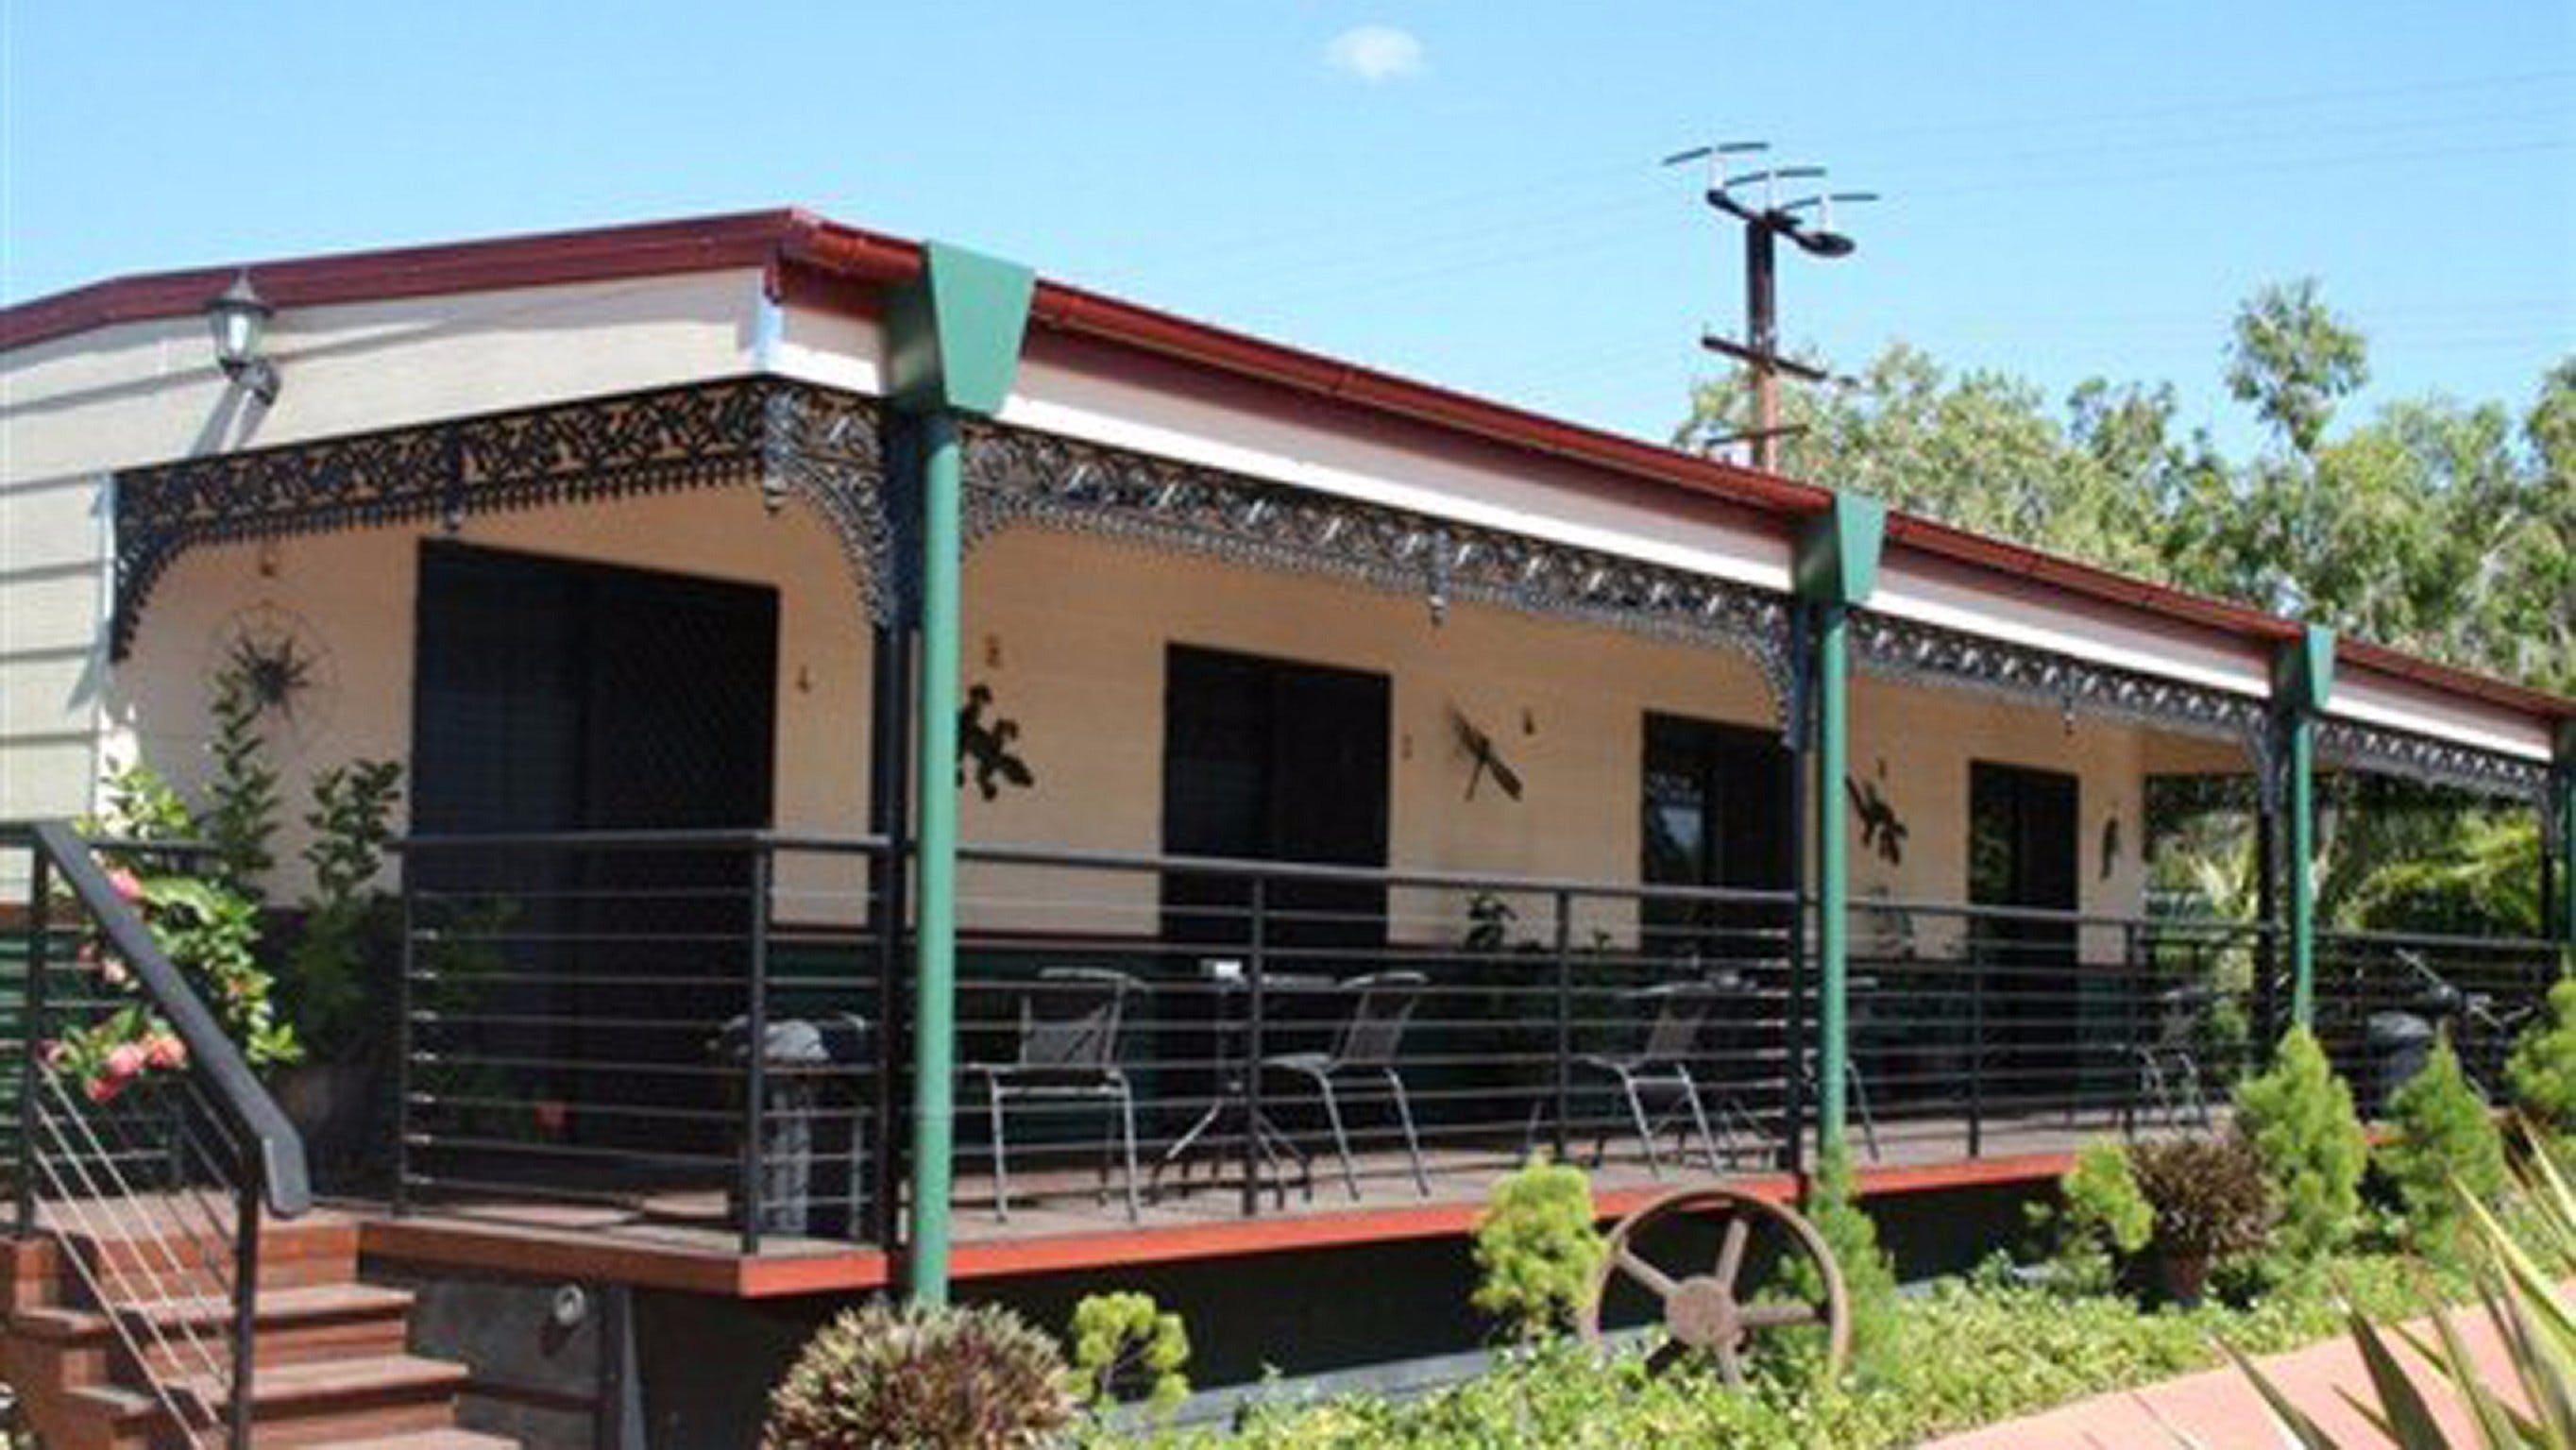 Pine Creek Railway Resort - Accommodation in Bendigo